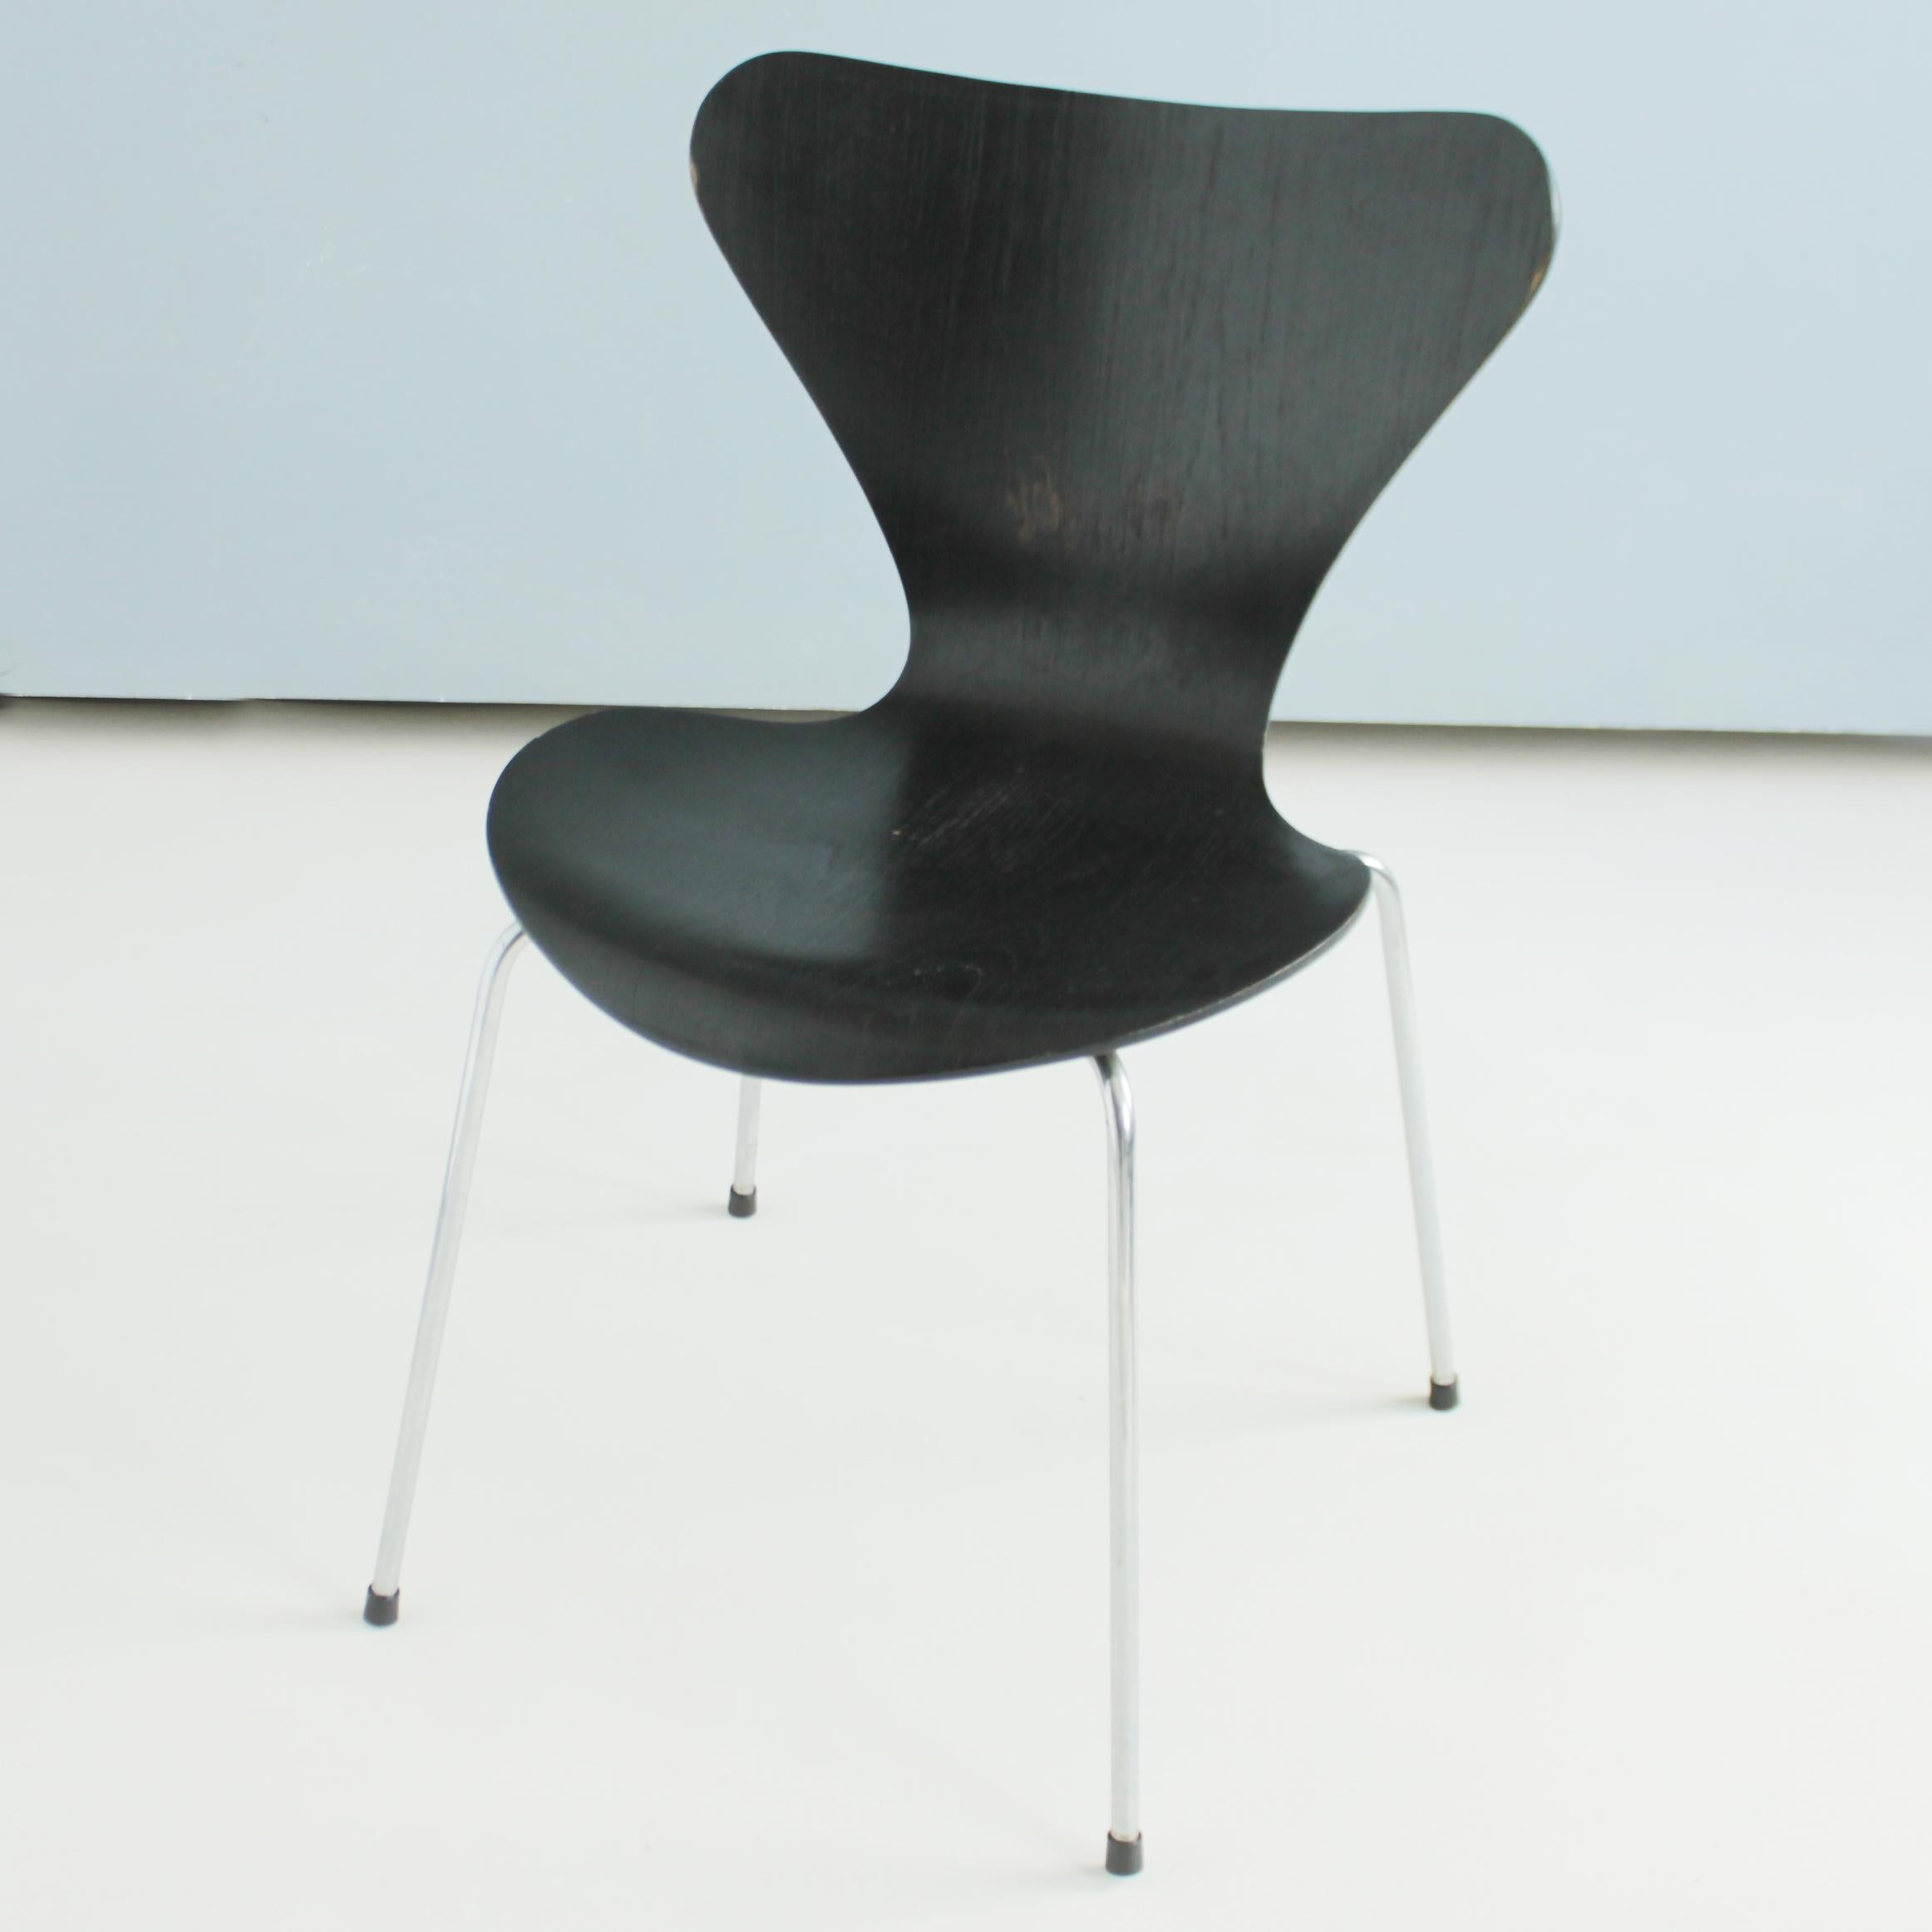 Late 20th Century Arne Jacobsen Series 7 Chairs by Fritz Hansen